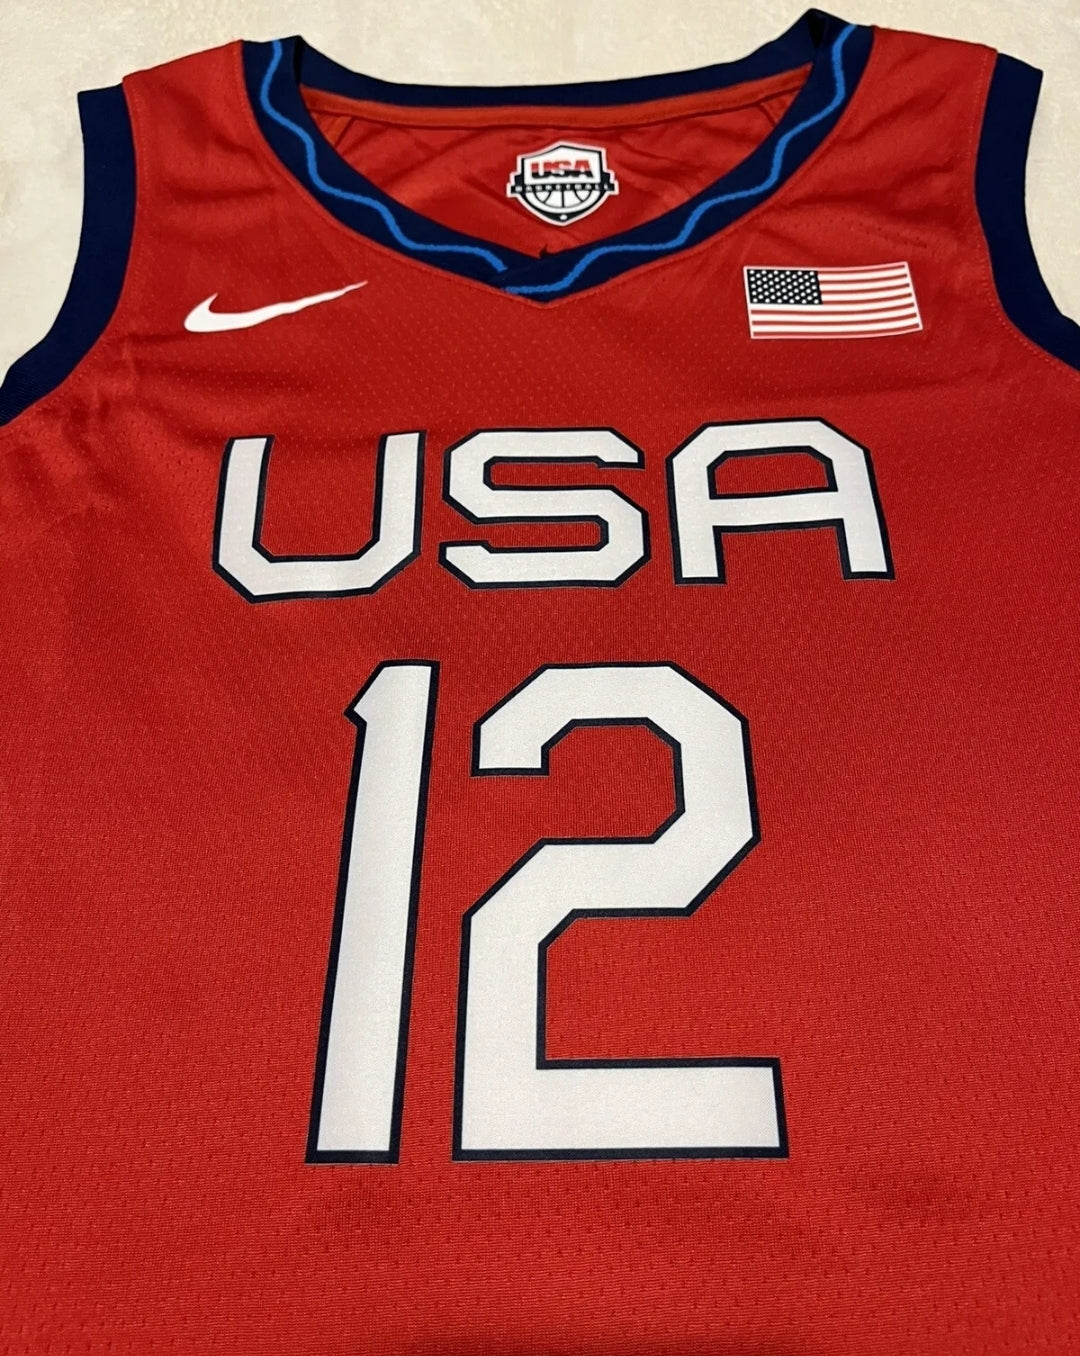 Nike Womens Team USA Basketball Jersey Medium #12 Diana Taurasi Tokyo Olympics.